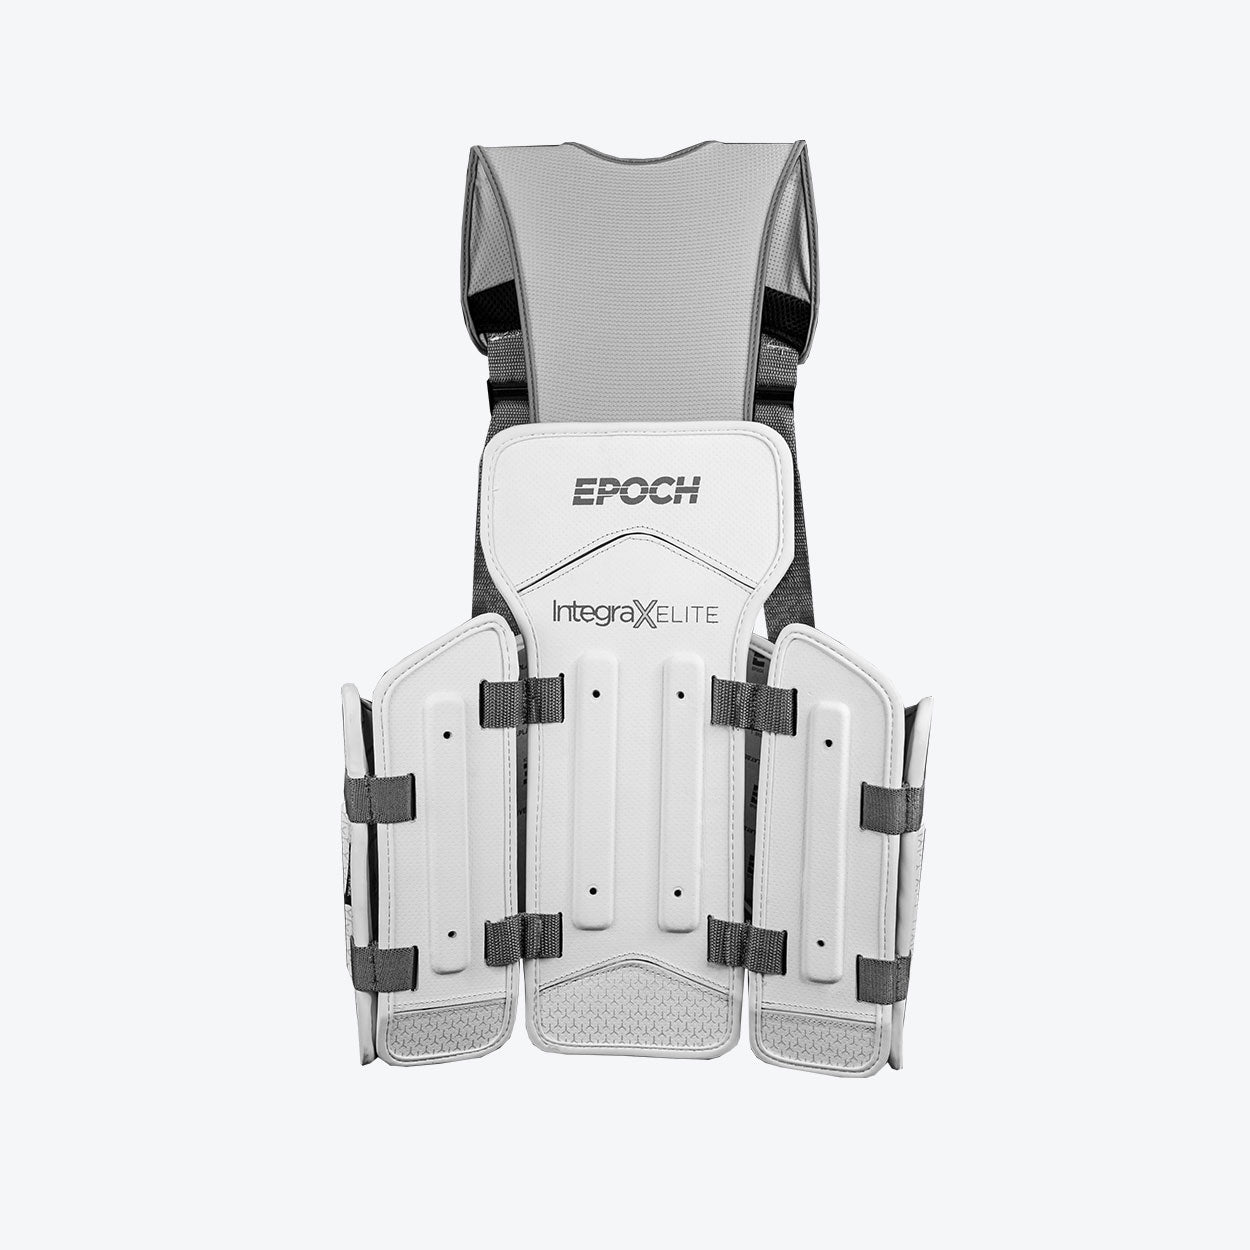 Epoch Integra X Elite Box Lacrosse Kidney Pads